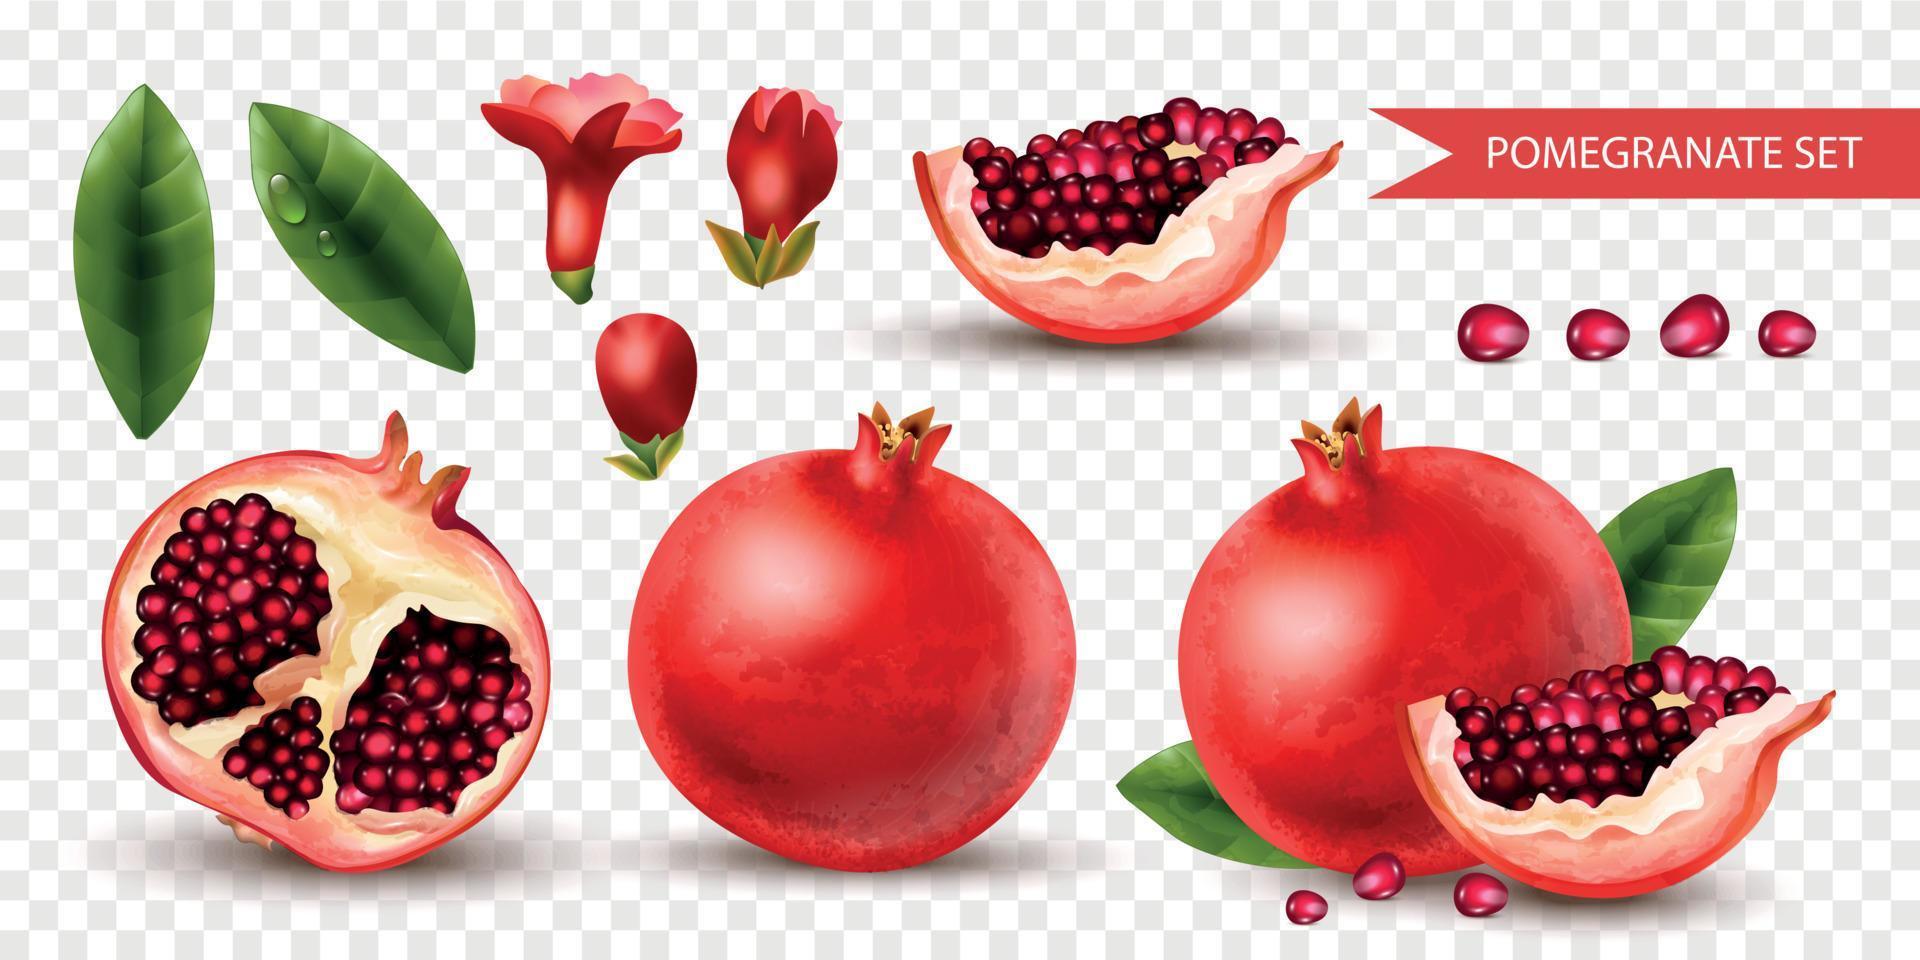 Realistic Pomegranate Set vector